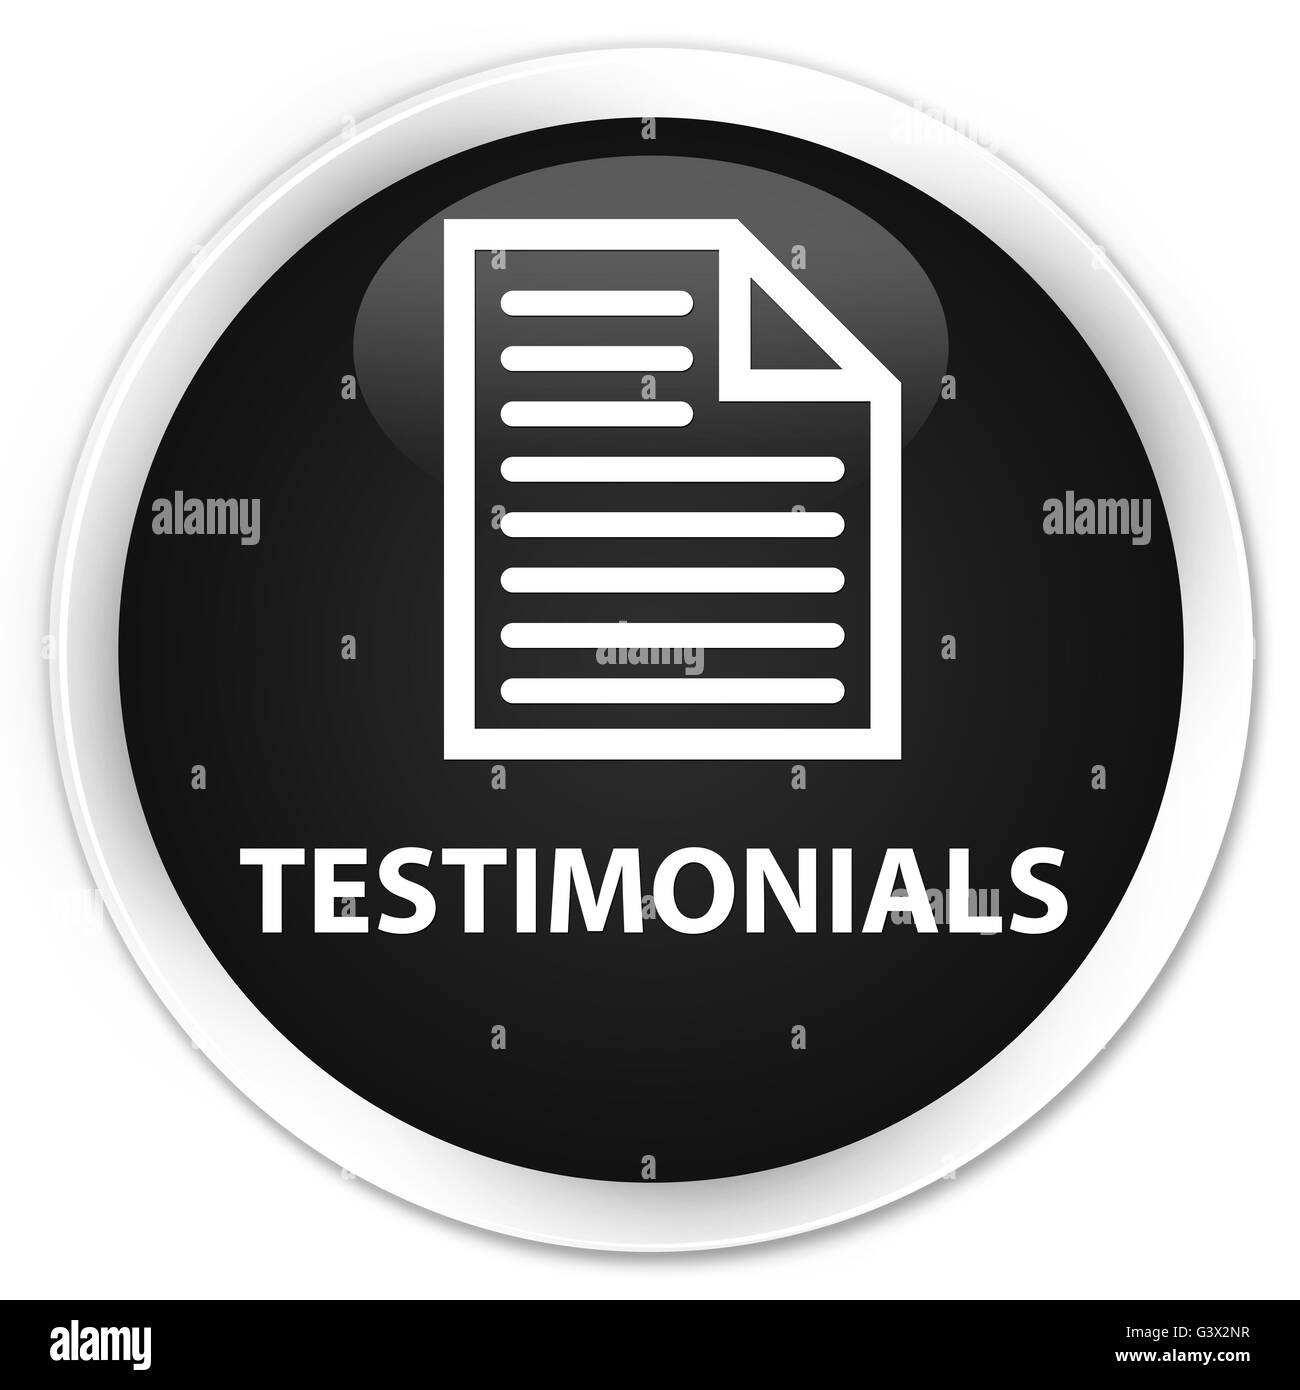 Testimonials (page icon) isolated on premium black round button abstract illustration Stock Photo